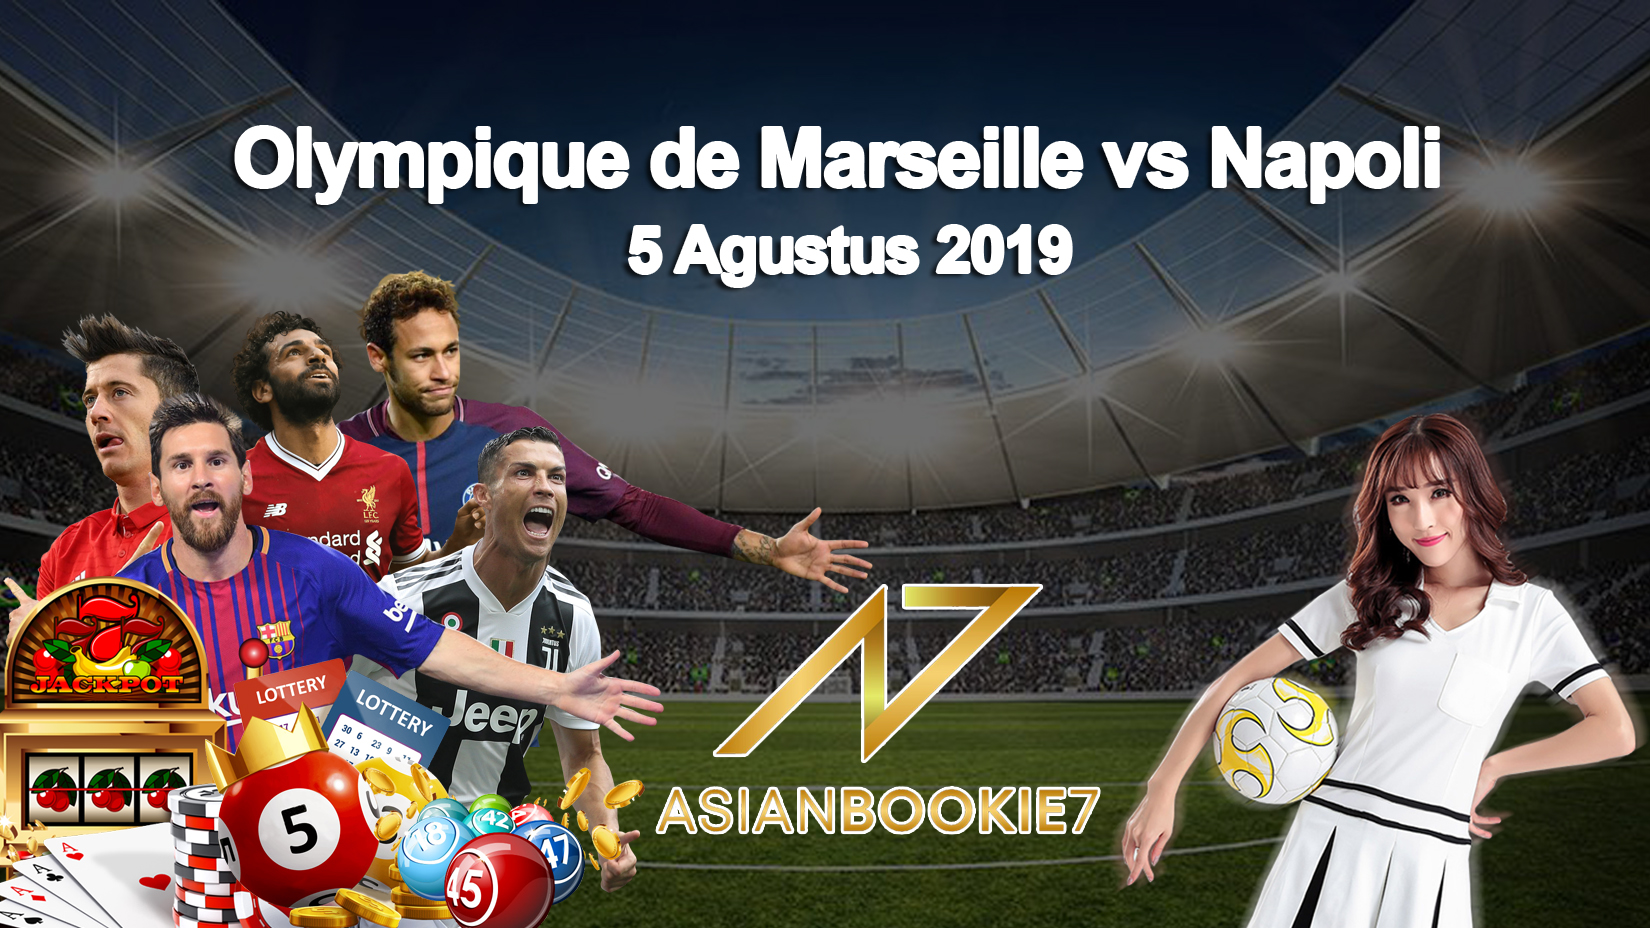 Prediksi Olympique de Marseille vs Napoli 5 Agustus 2019